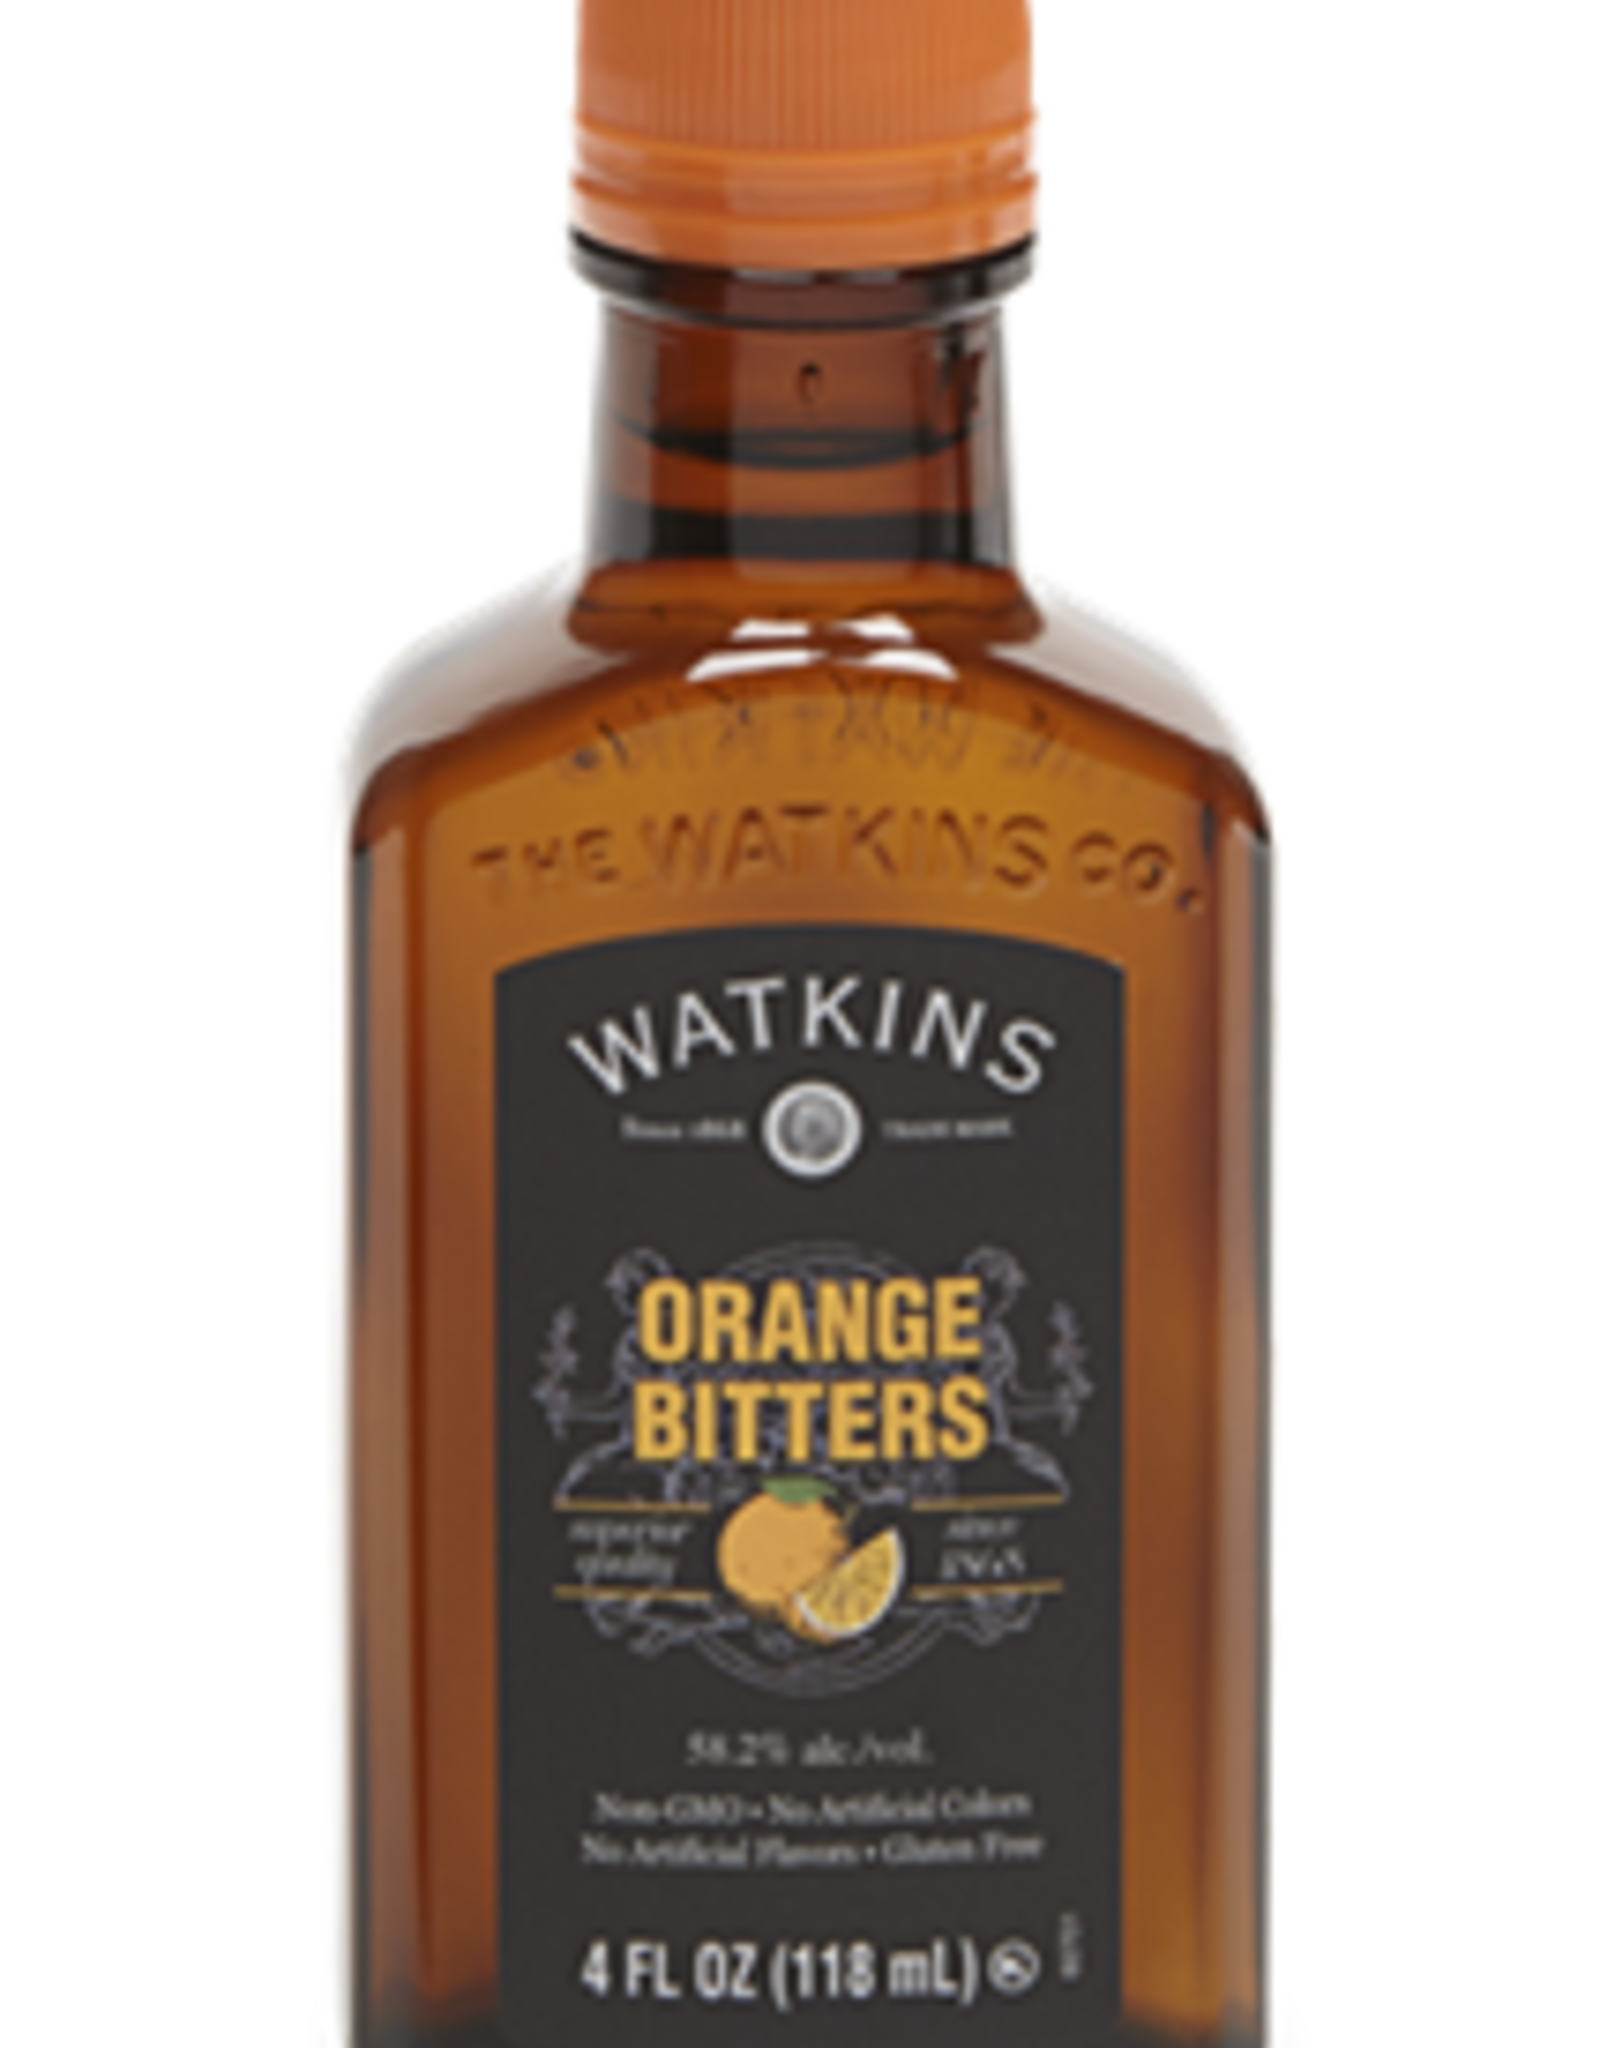 Watkins Orange Bitters